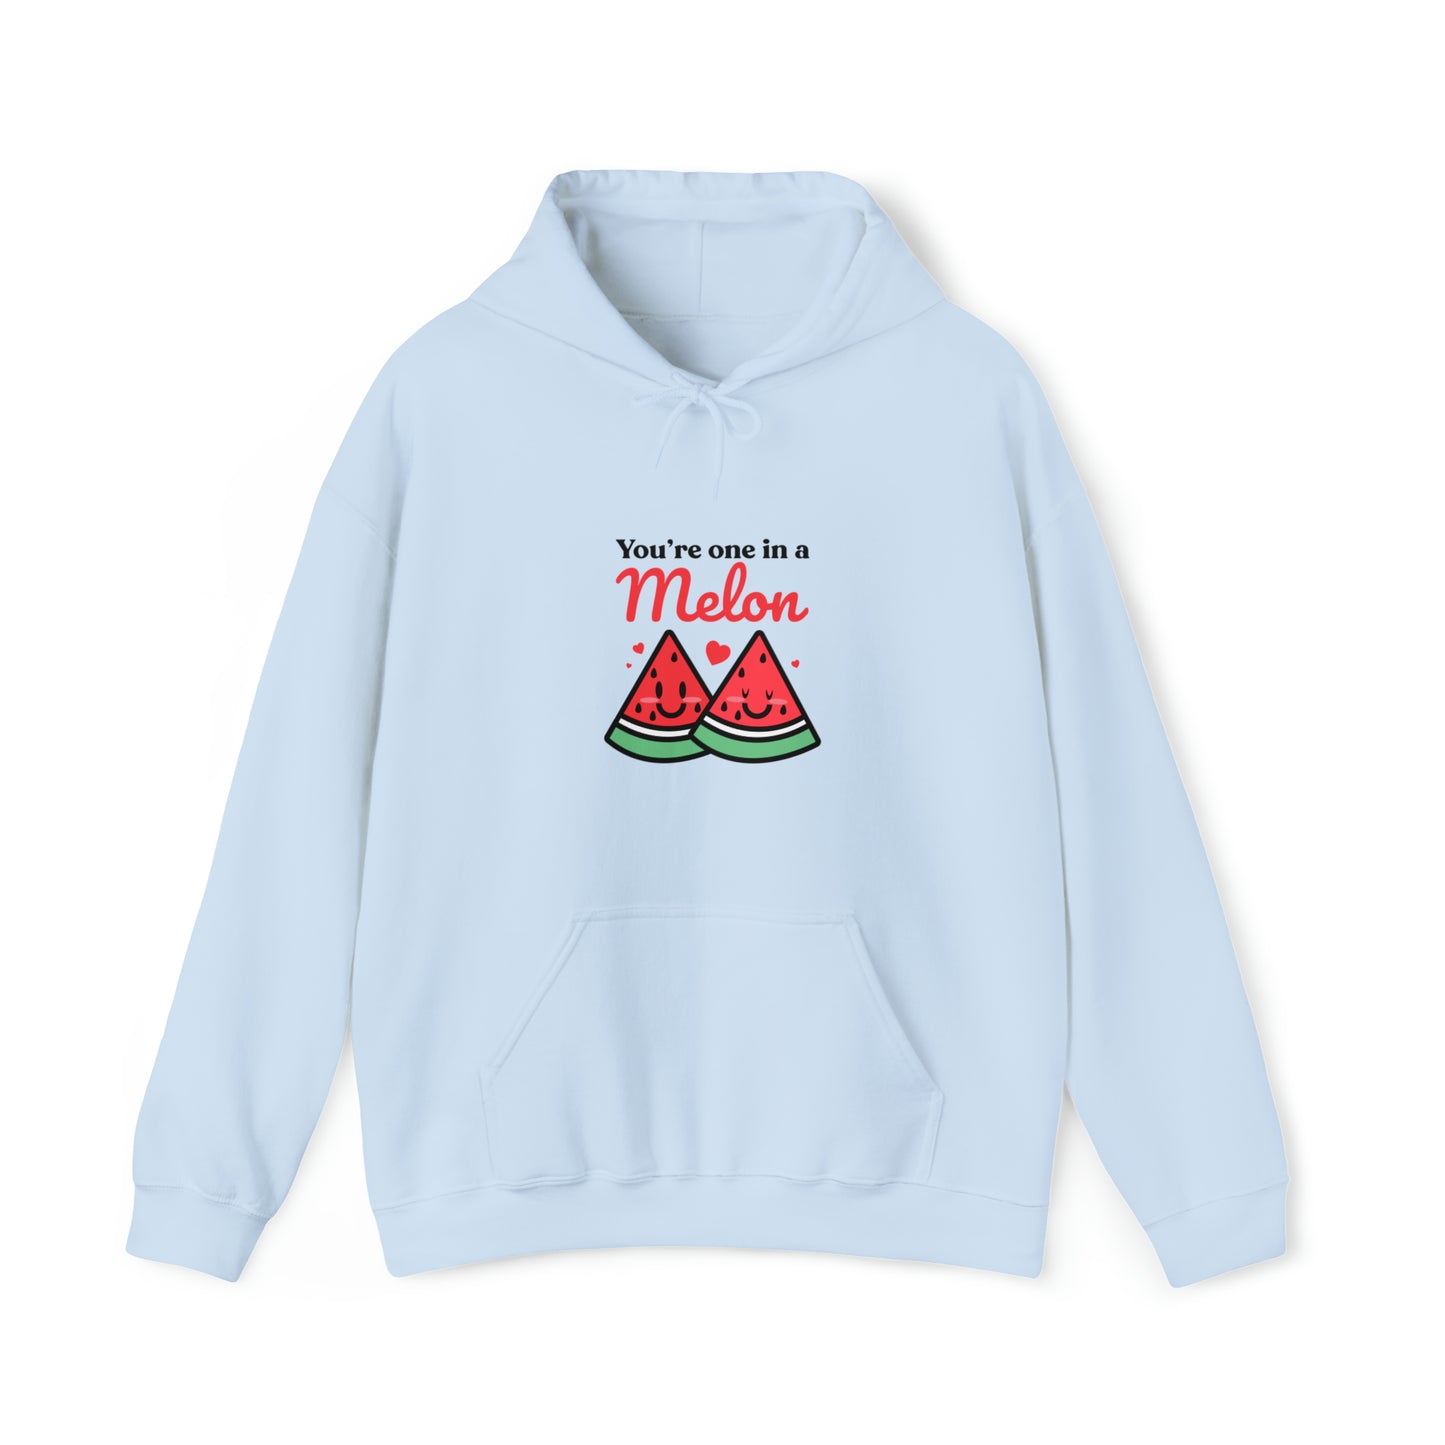 Custom Parody Hooded Sweatshirt, You're one in a Melon design